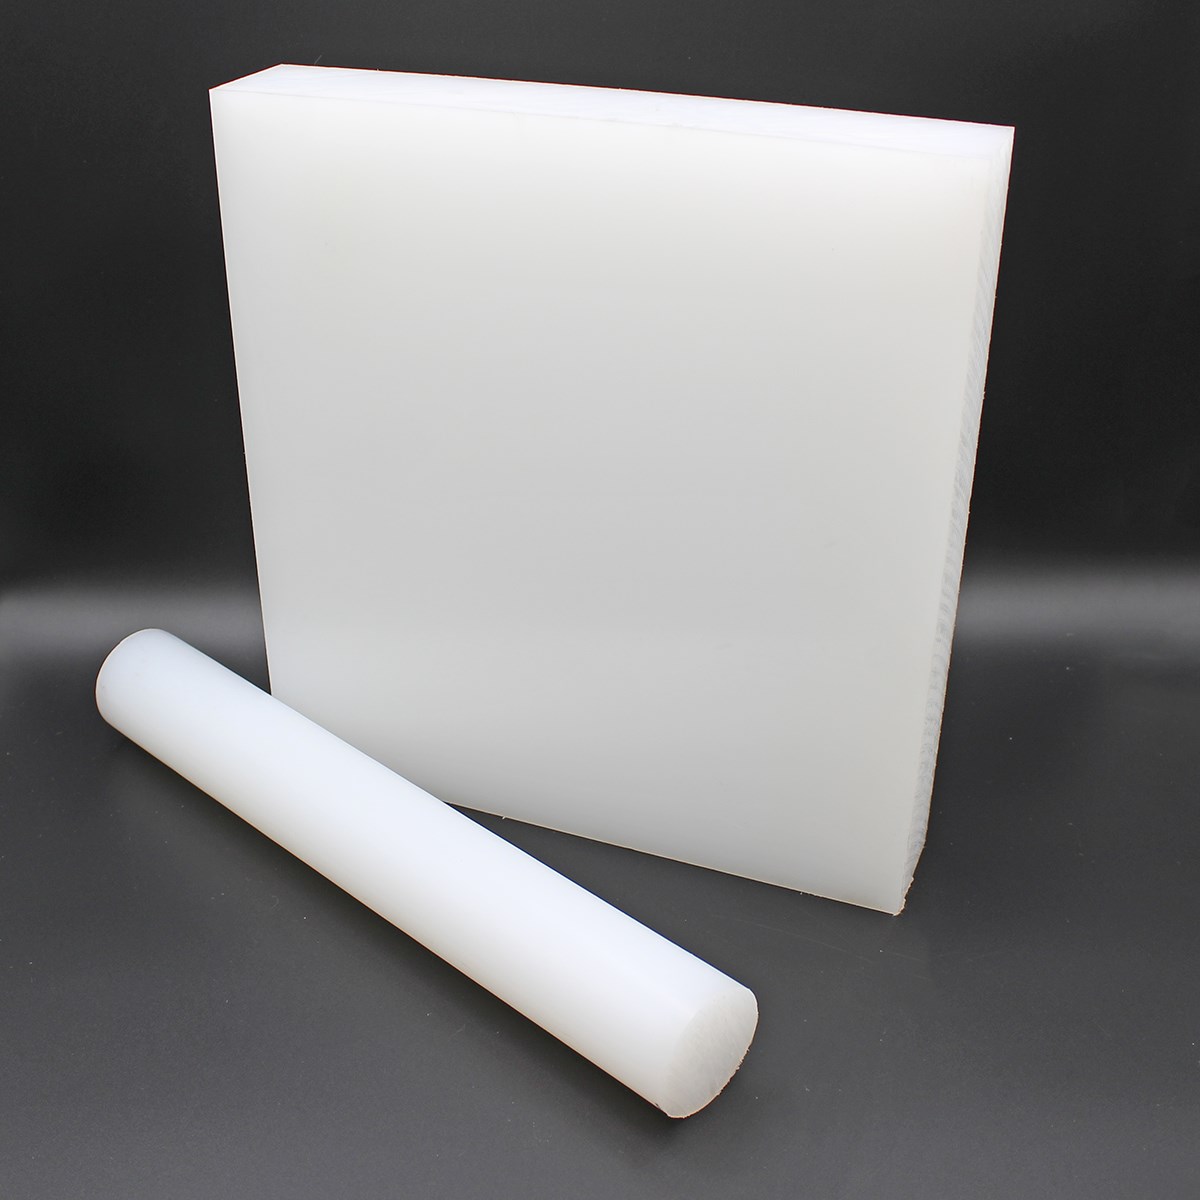 Standard Tolerance Rectangular Bar 4 Length LDPE 1 Thickness 3 Width Opaque Off-White Low Density Polyethylene 